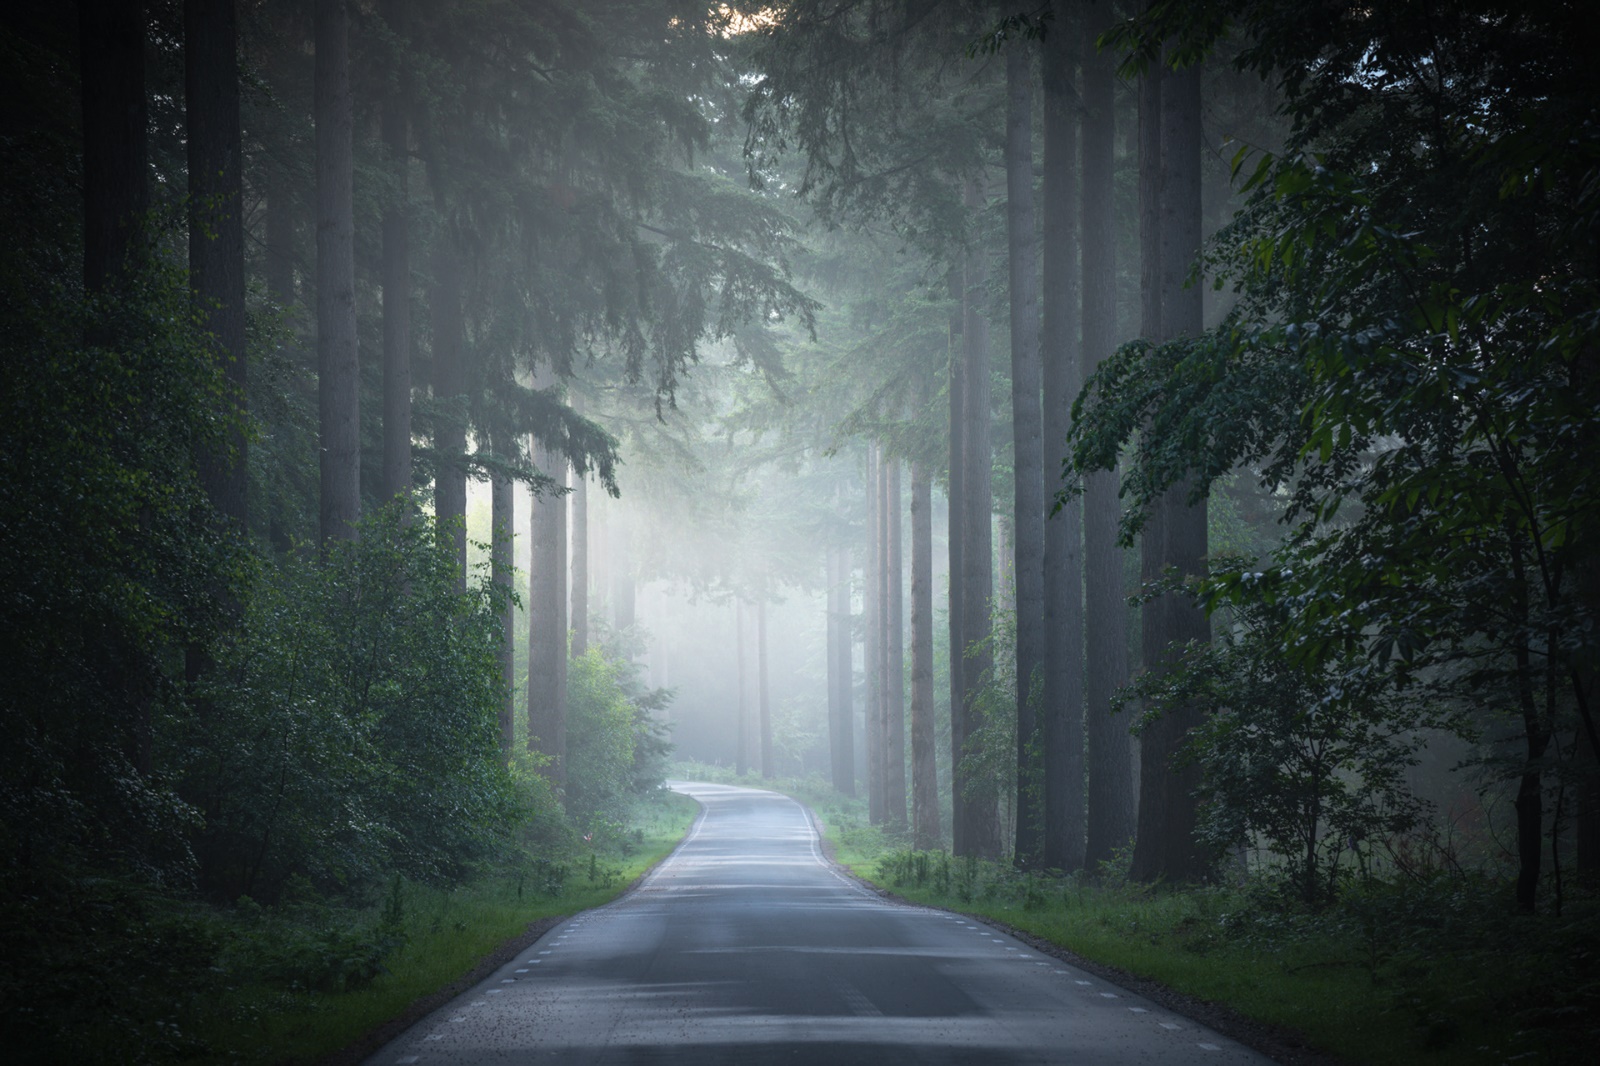 Finnish forest road in the fog / Albert Druss